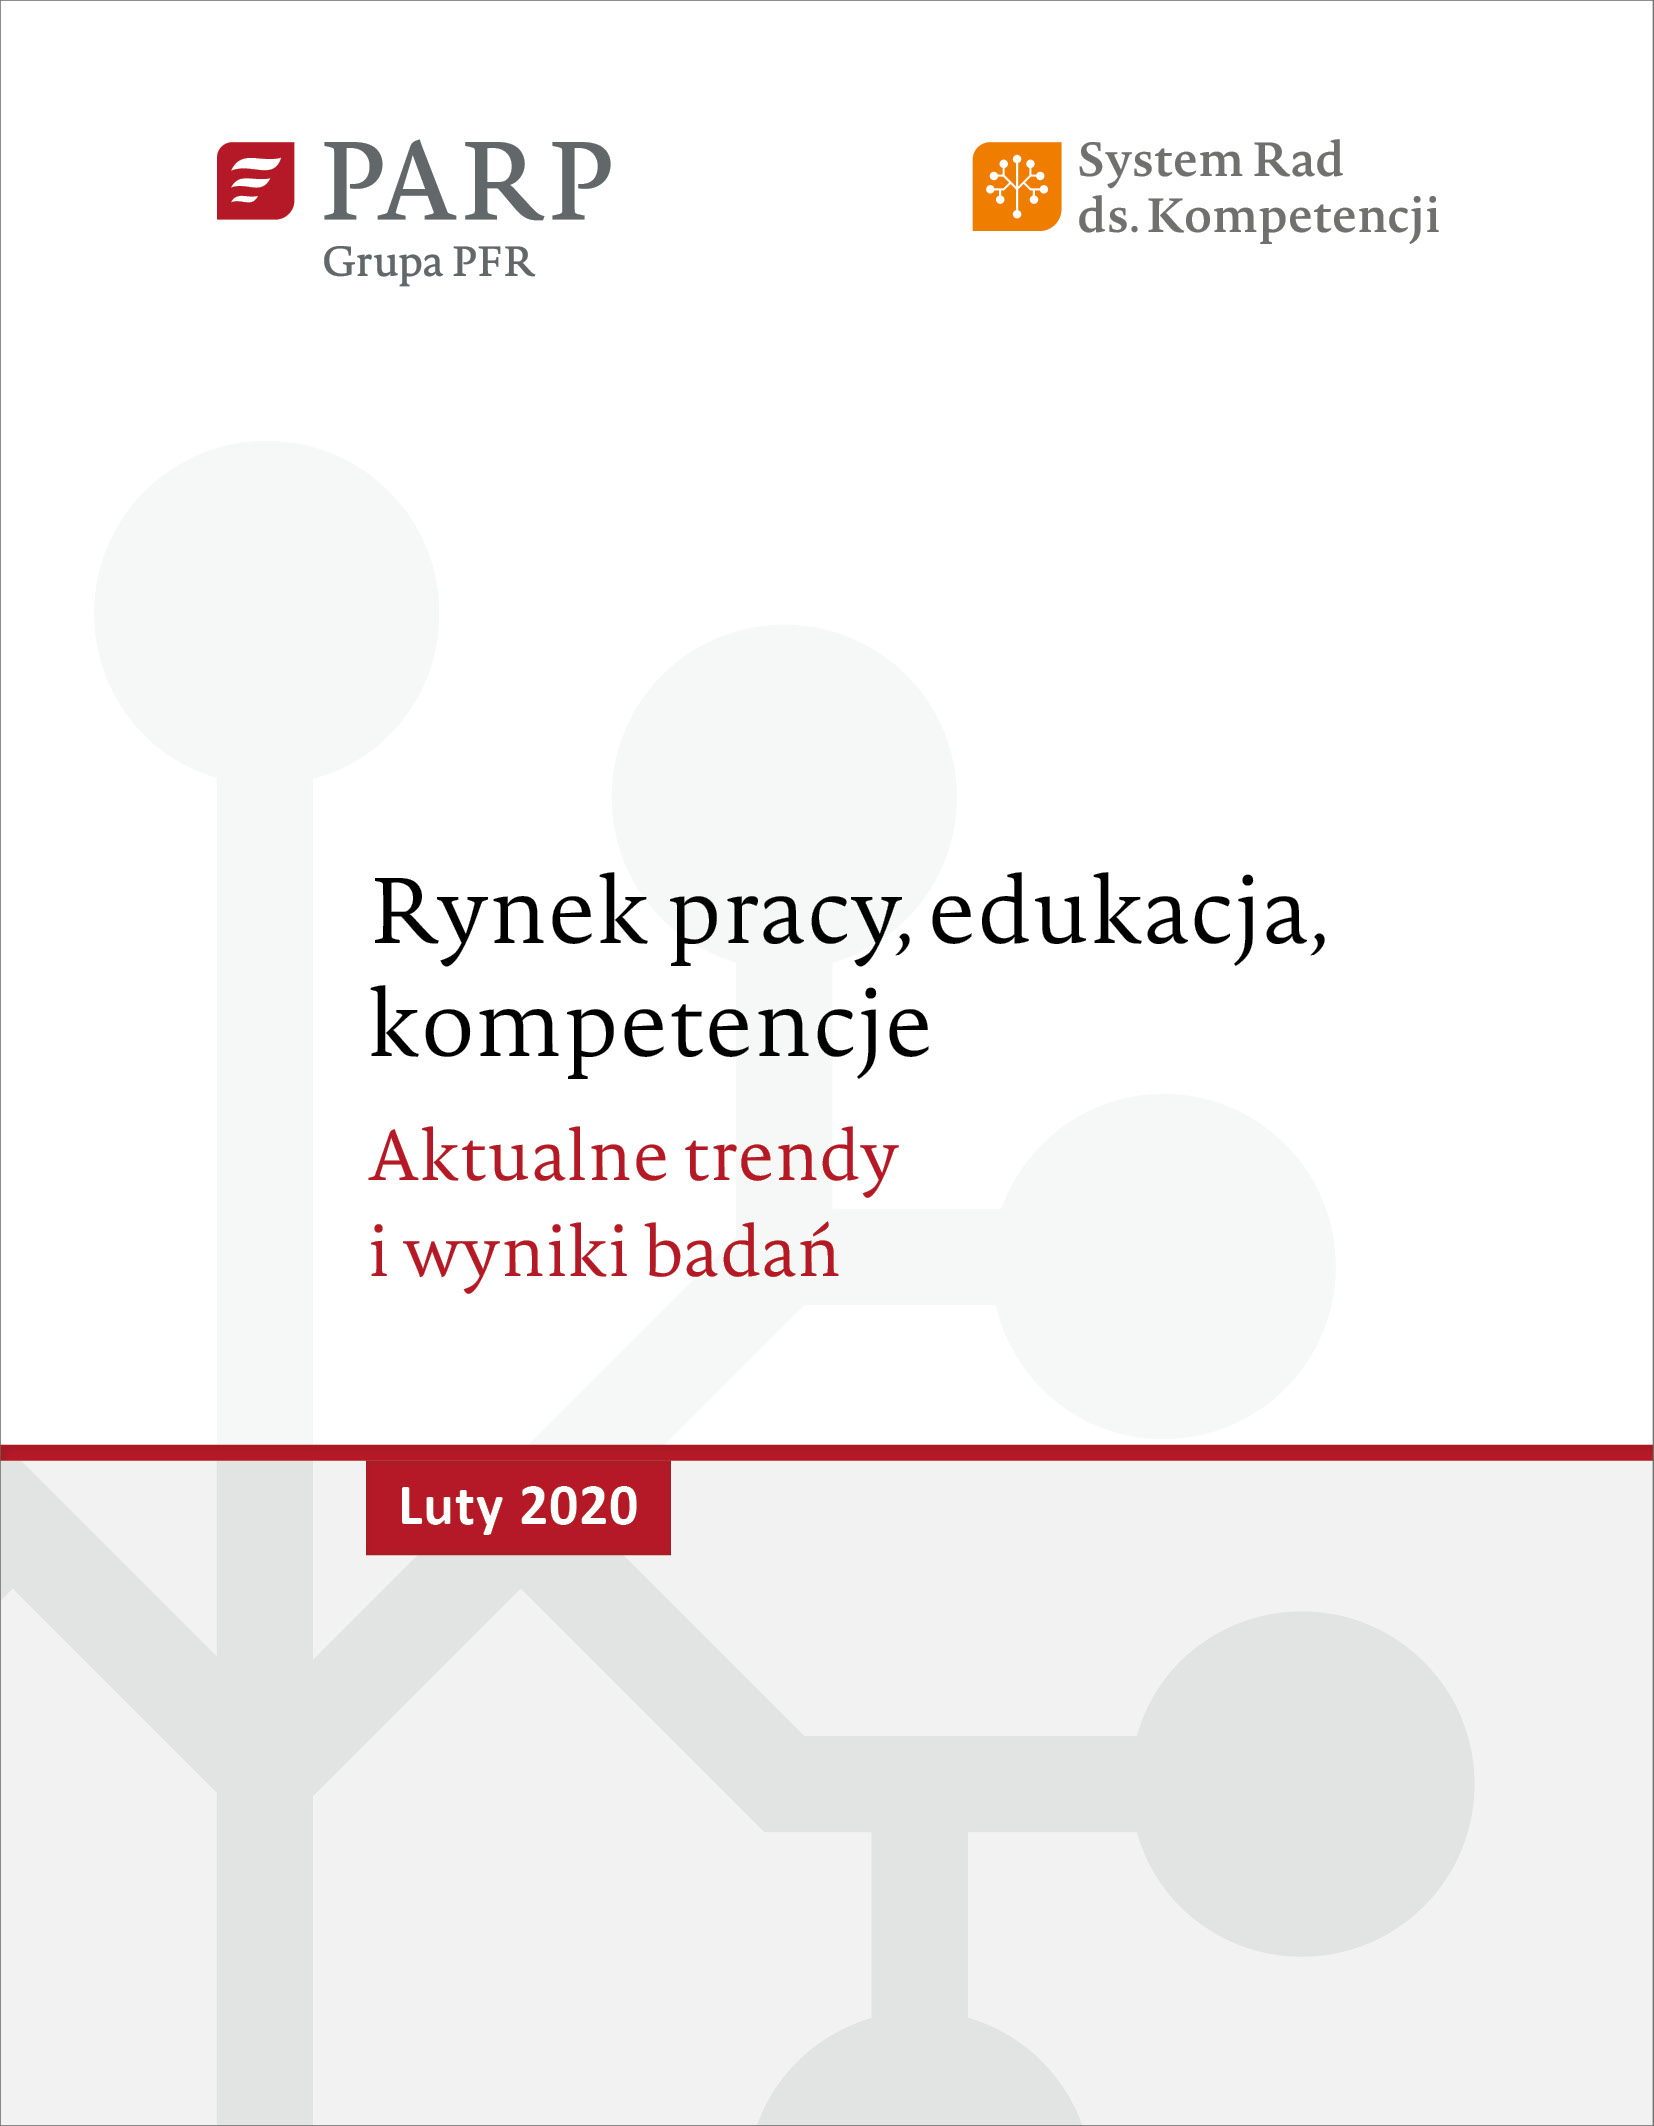 Rynek pracy, edukacja, kompetencje - luty 2020